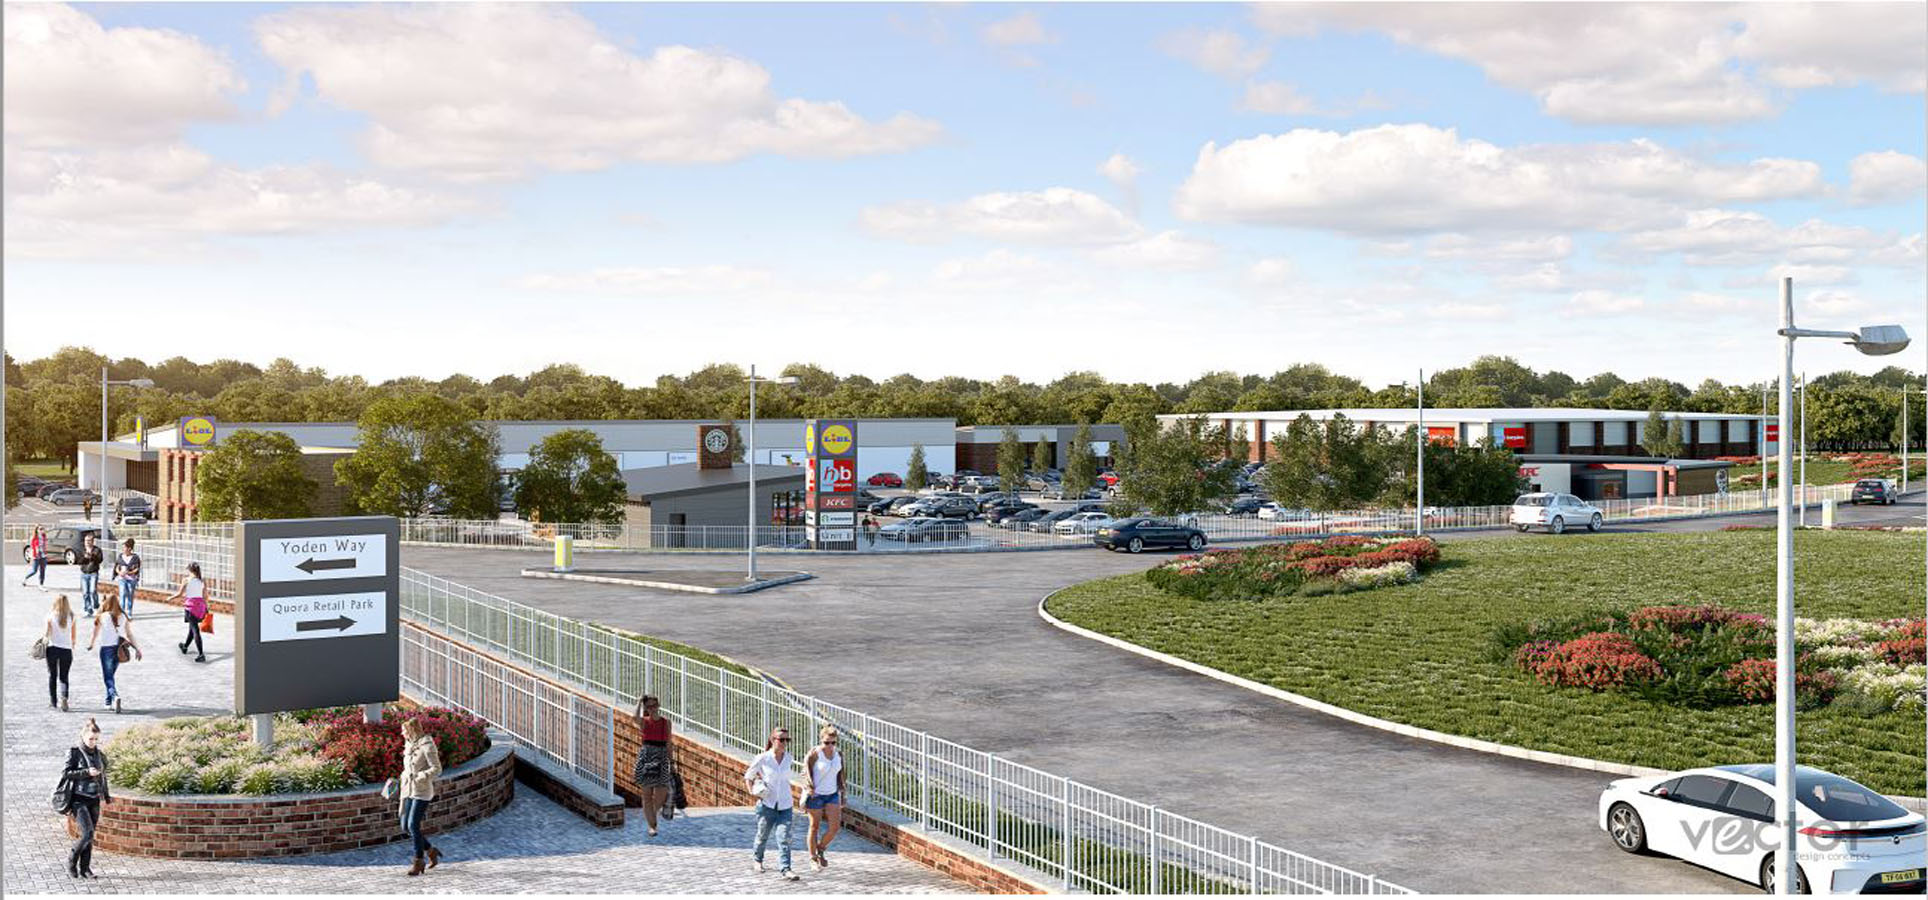 Work Starts on Retail Development in Peterlee, Jessops Construction Ltd